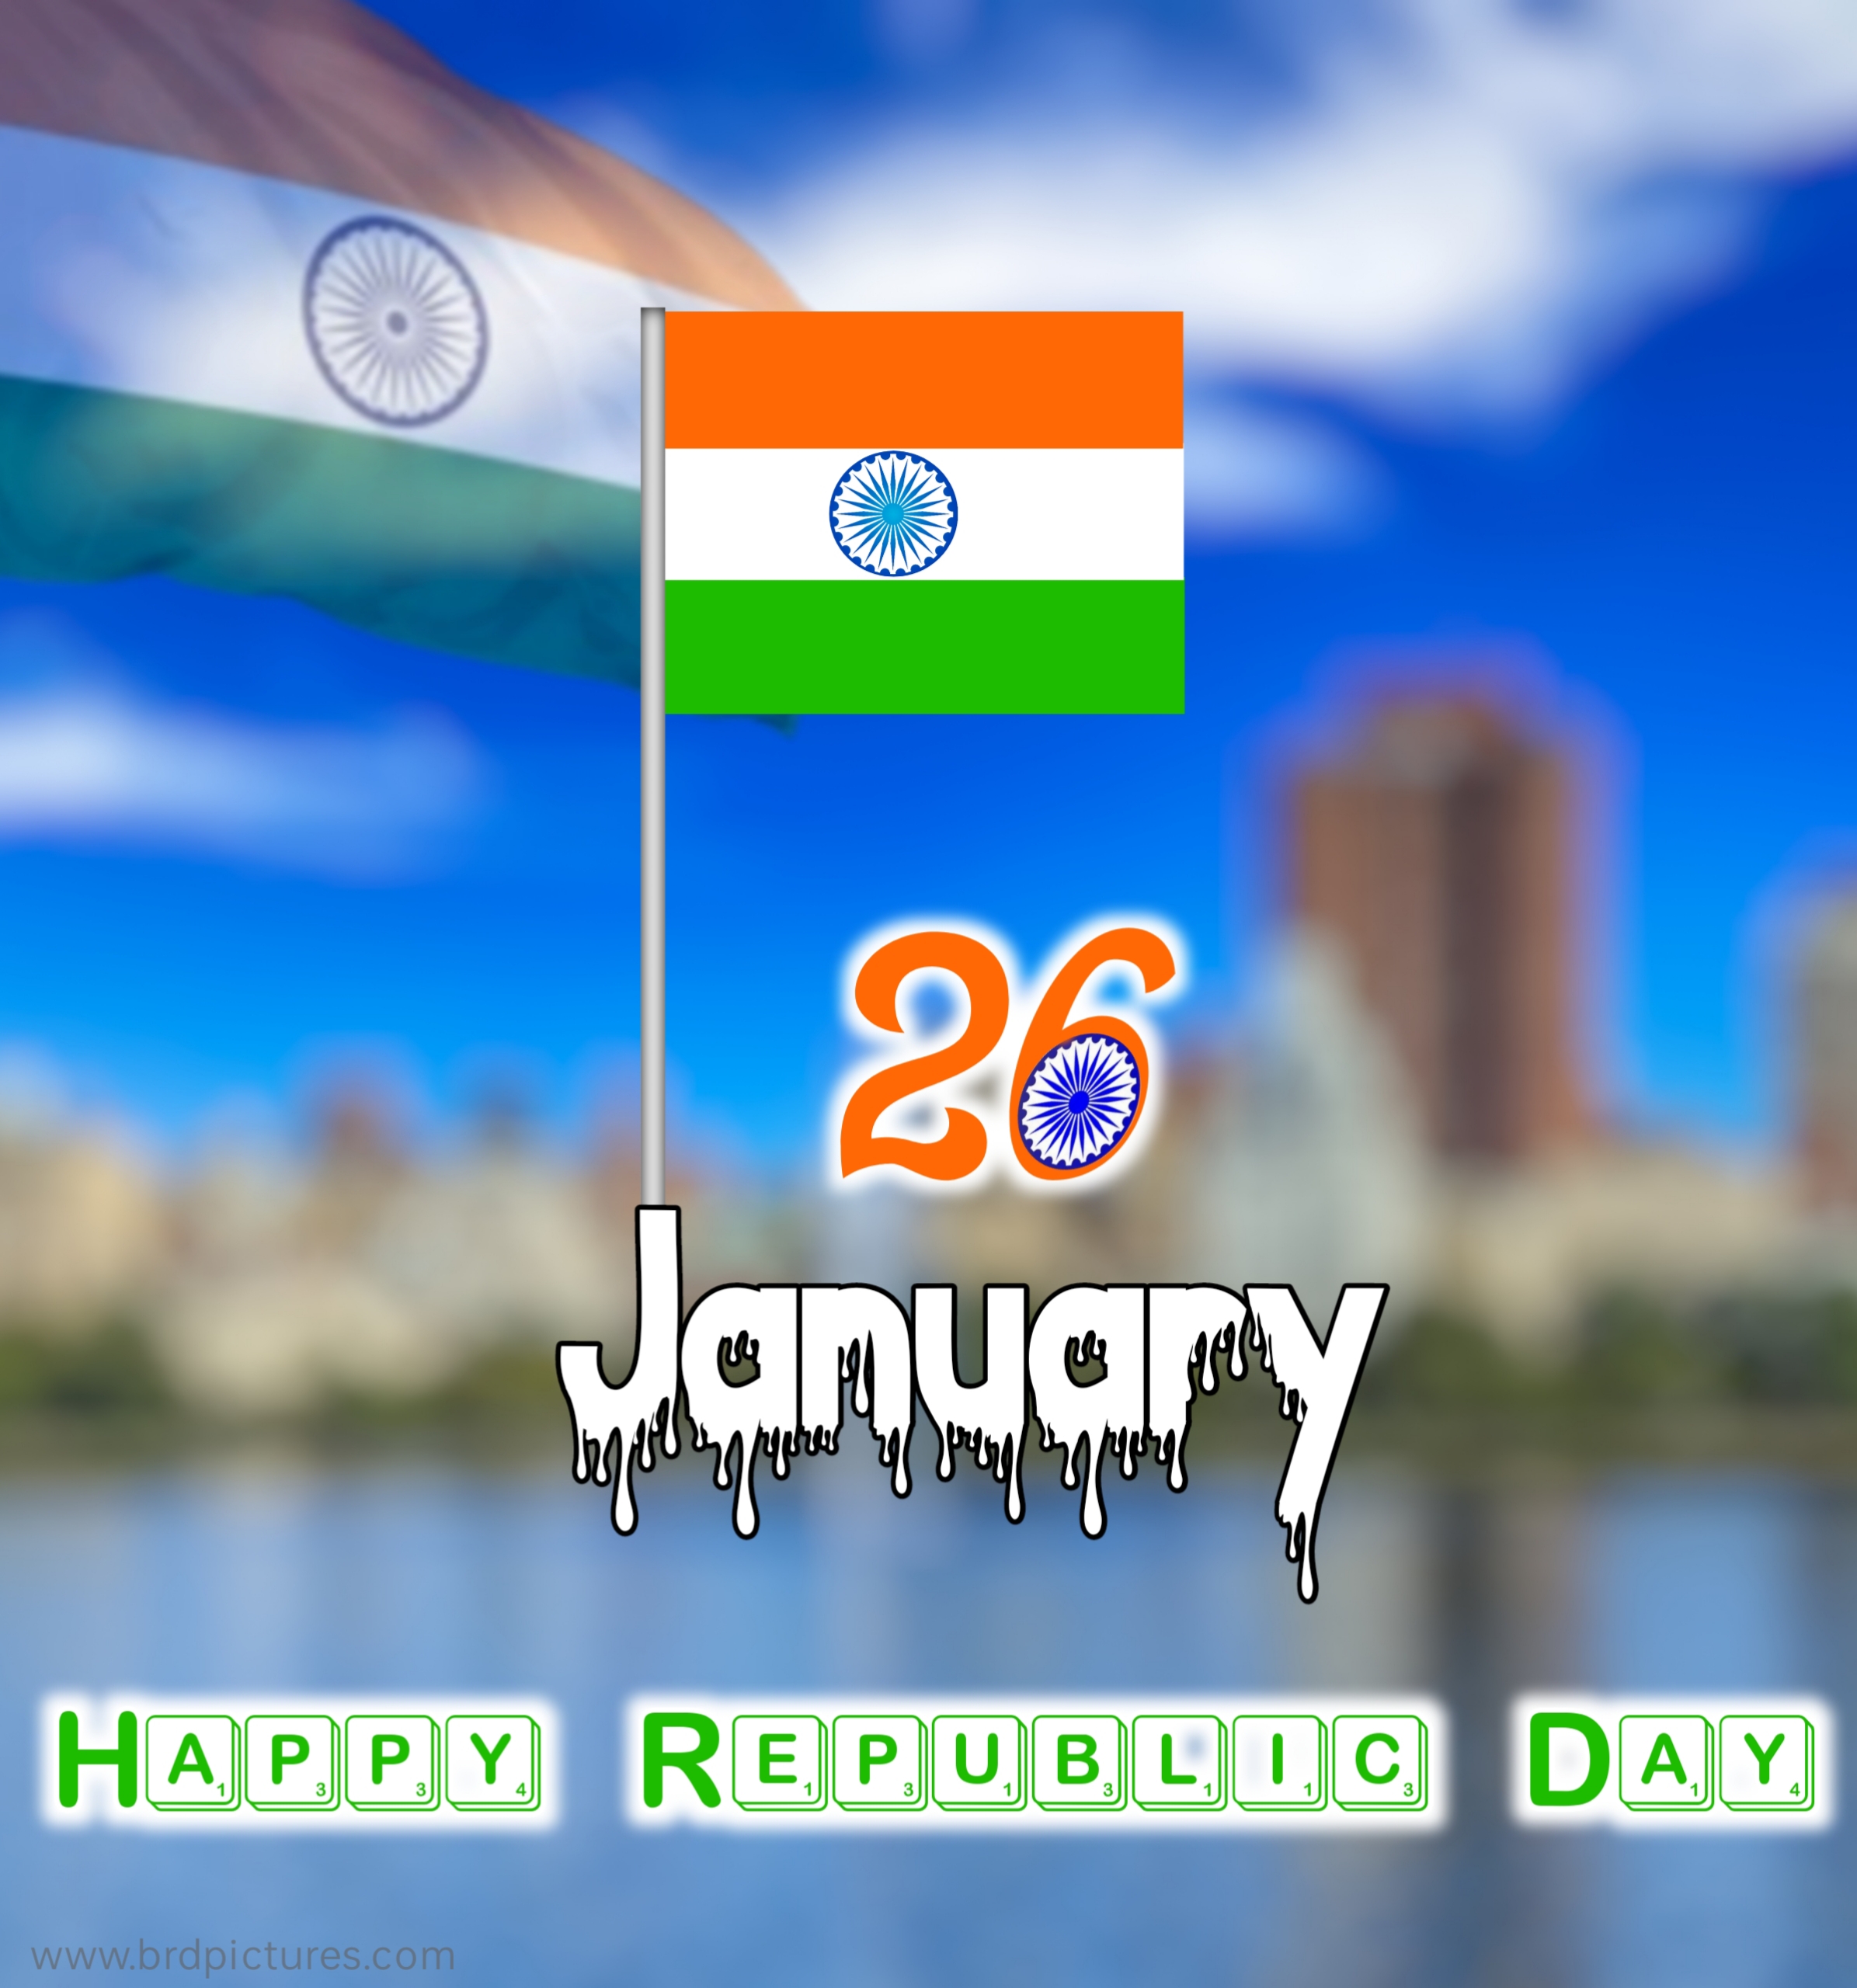 Republic Day Image 